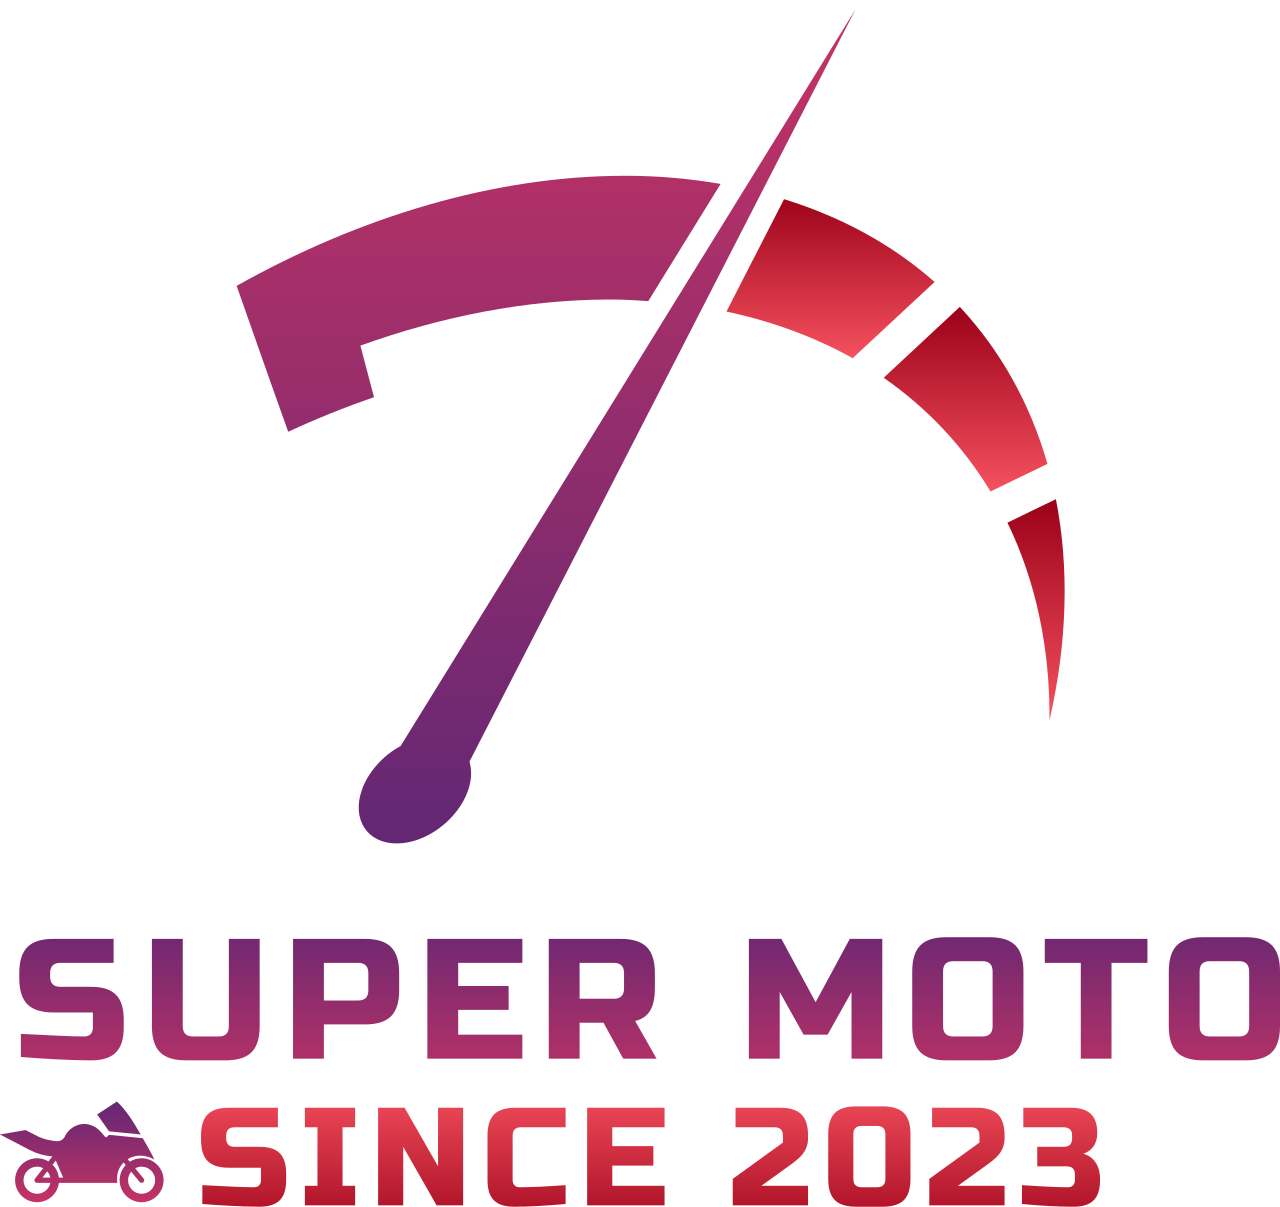 Super moto's web page